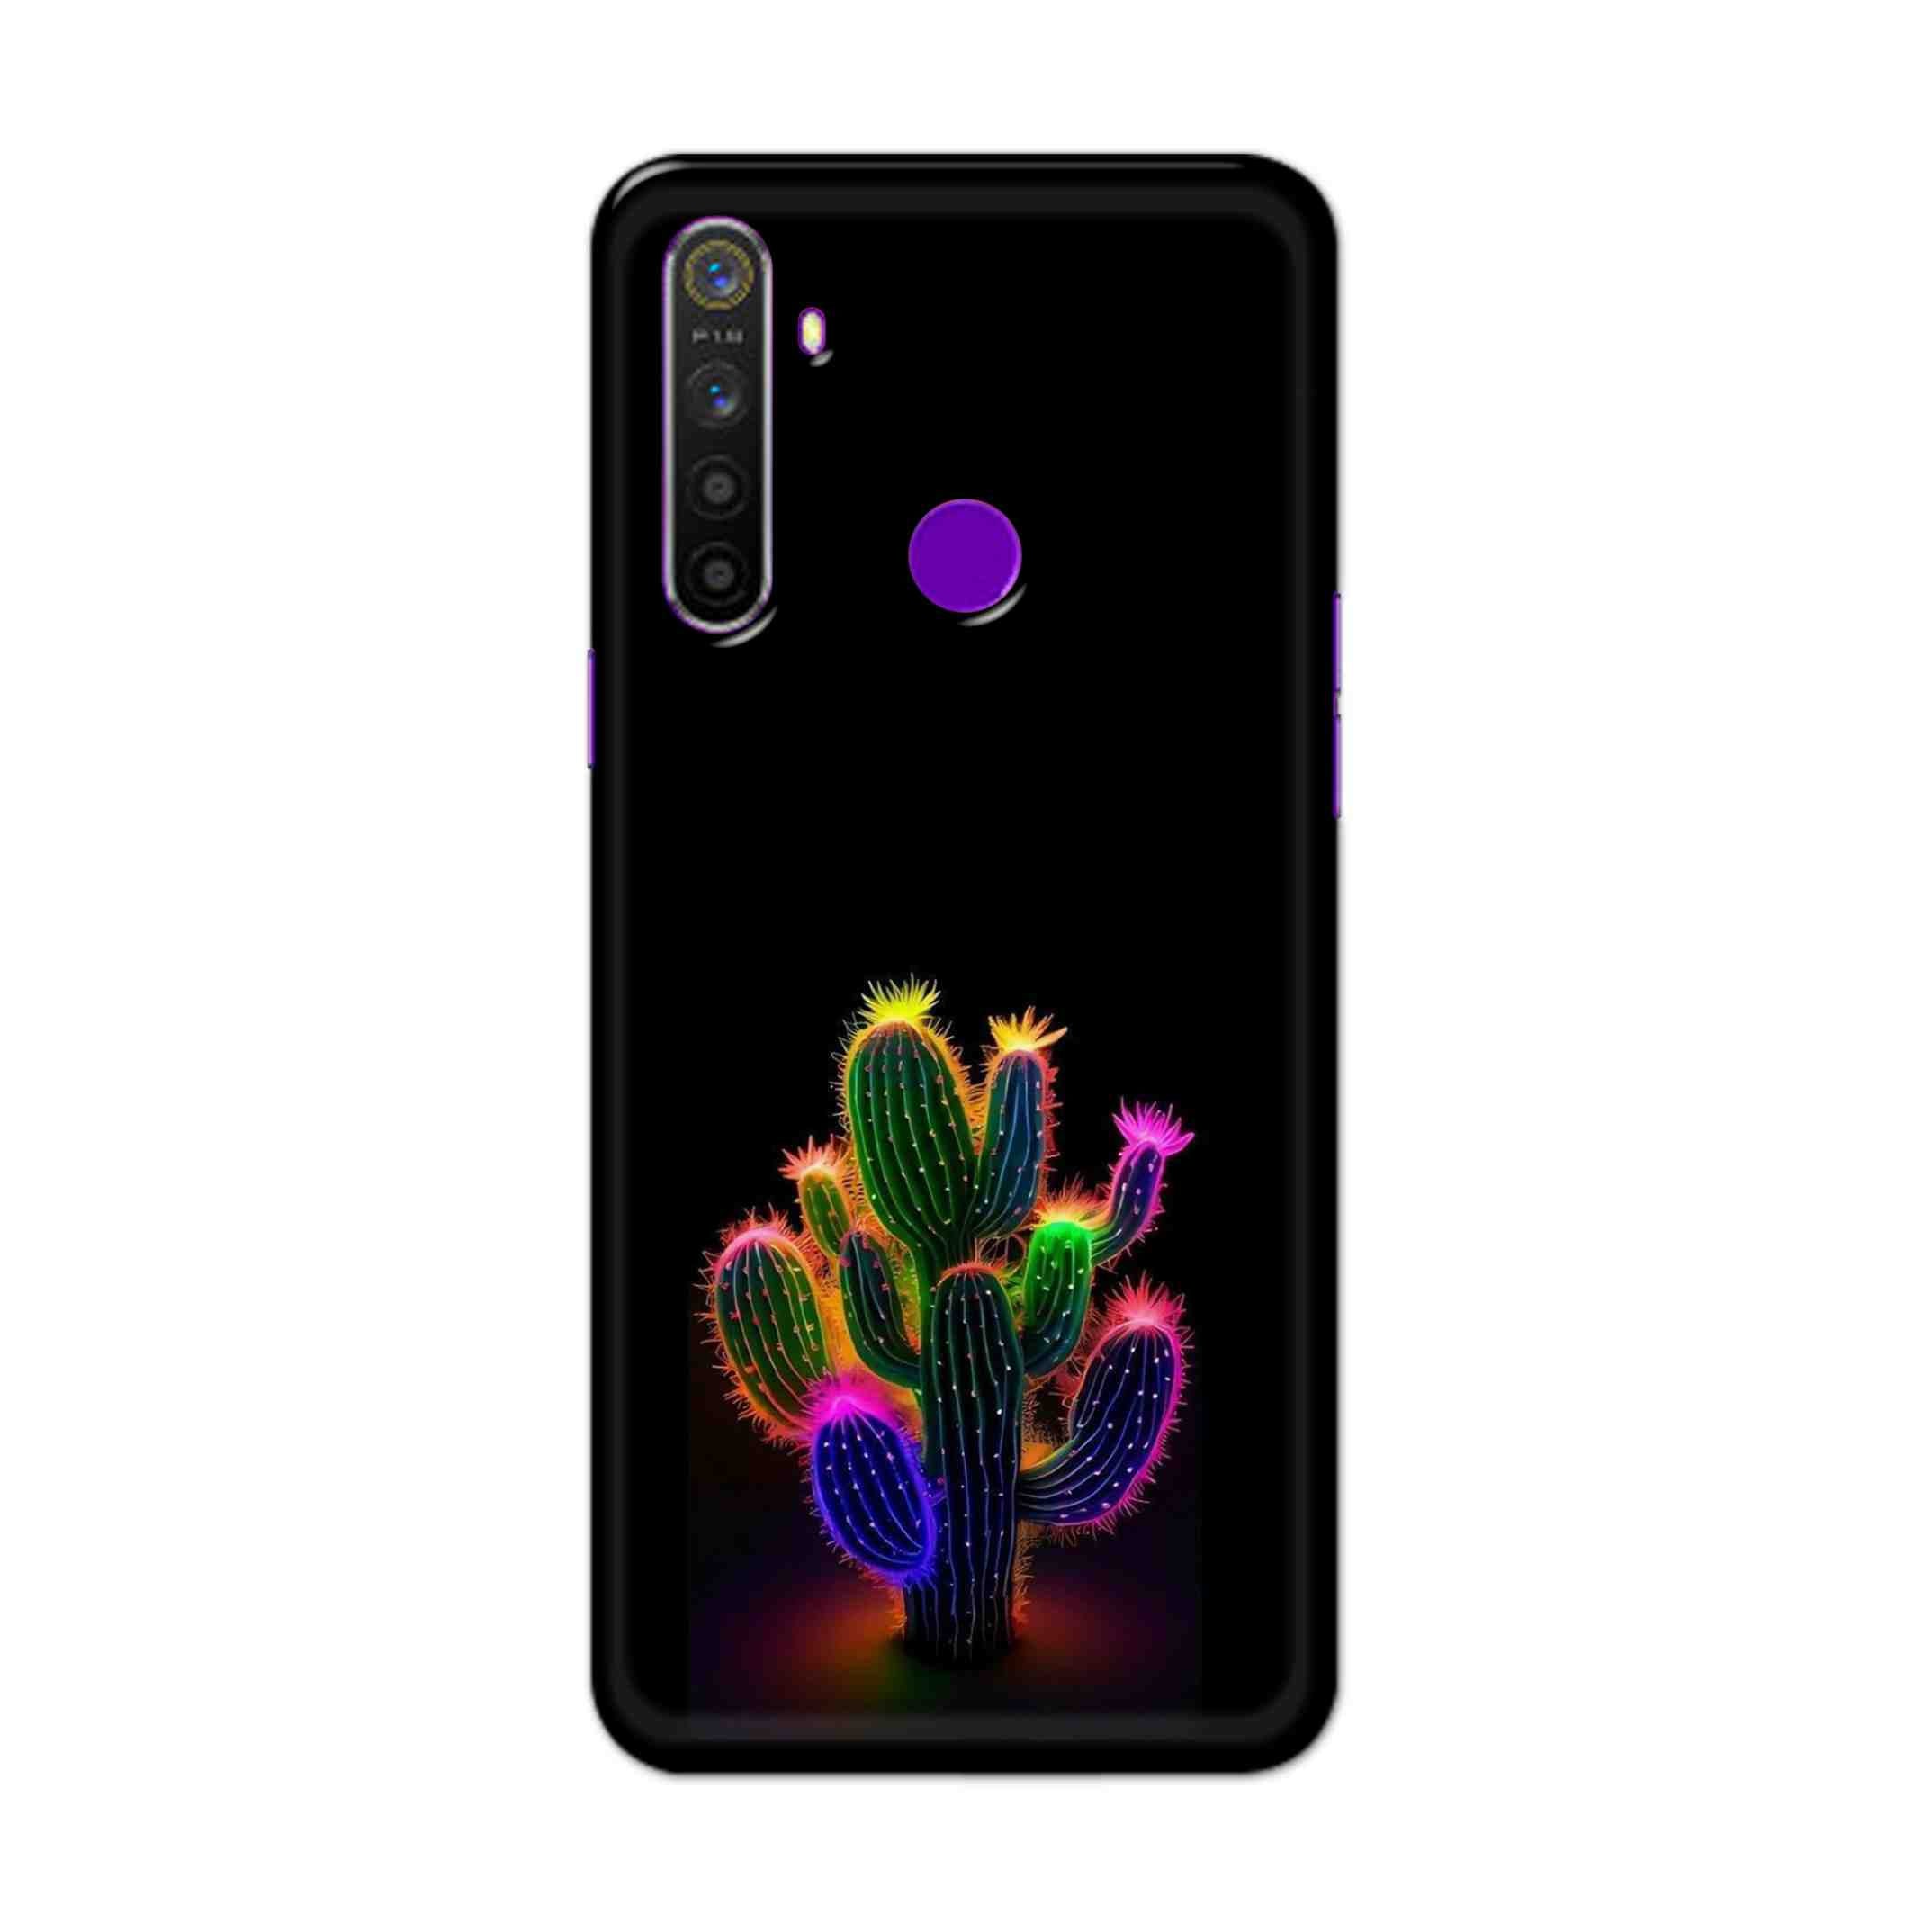 Buy Neon Flower Hard Back Mobile Phone Case Cover For Realme 5 Online